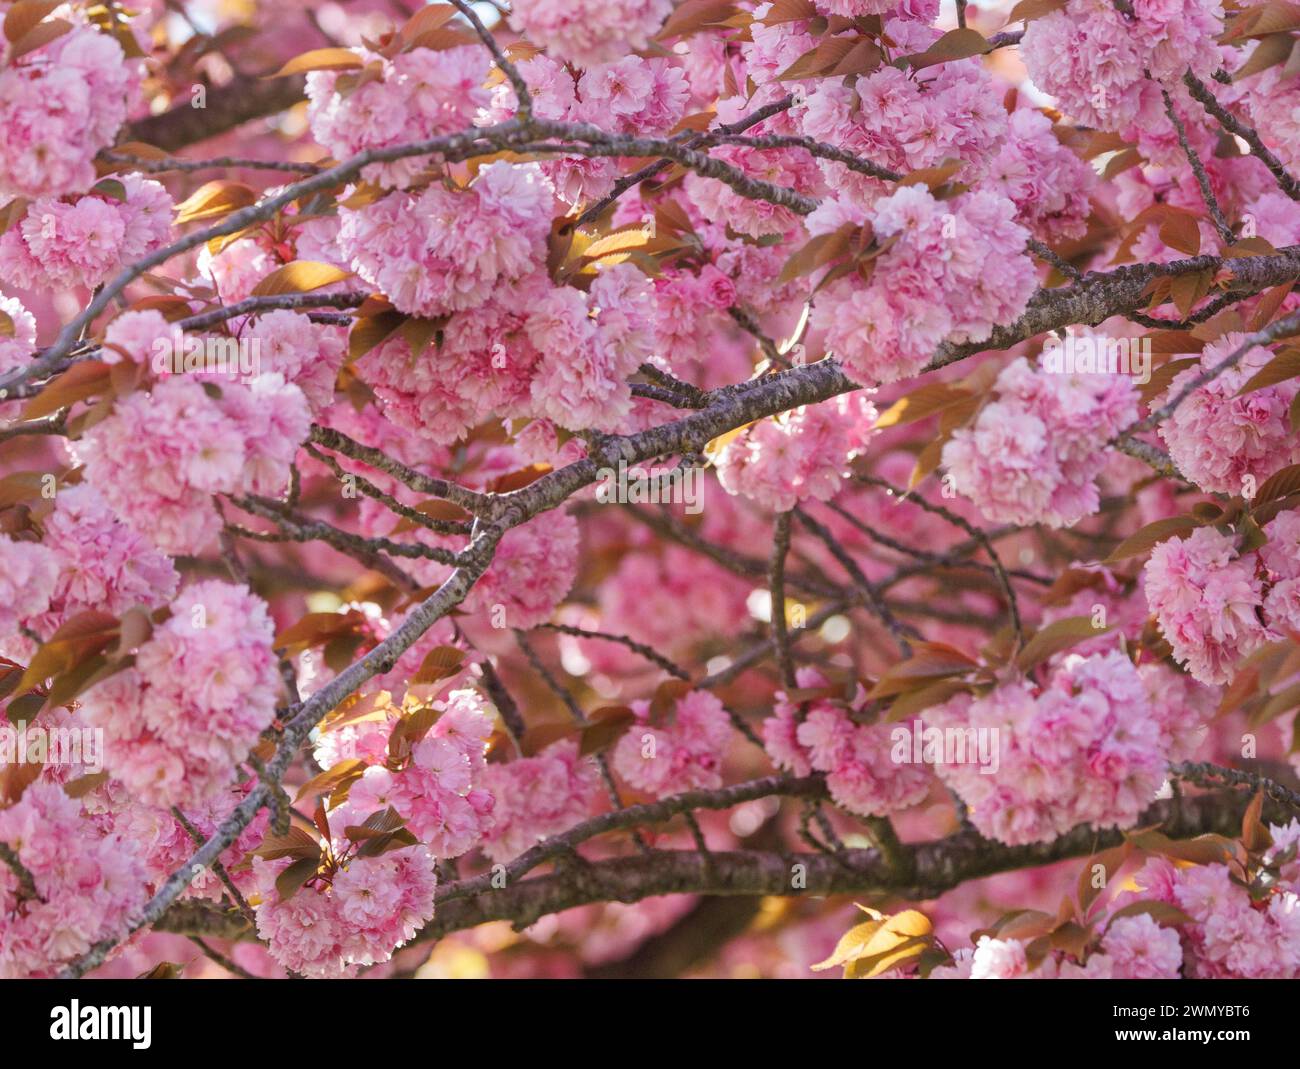 France, Bretagne, Ille et Vilaine, Le Rheu, France, Ille et Vilaine, Le Rheu, alley of Japanese Cherry trees (Prunus serrulata), blooming in spring Stock Photo